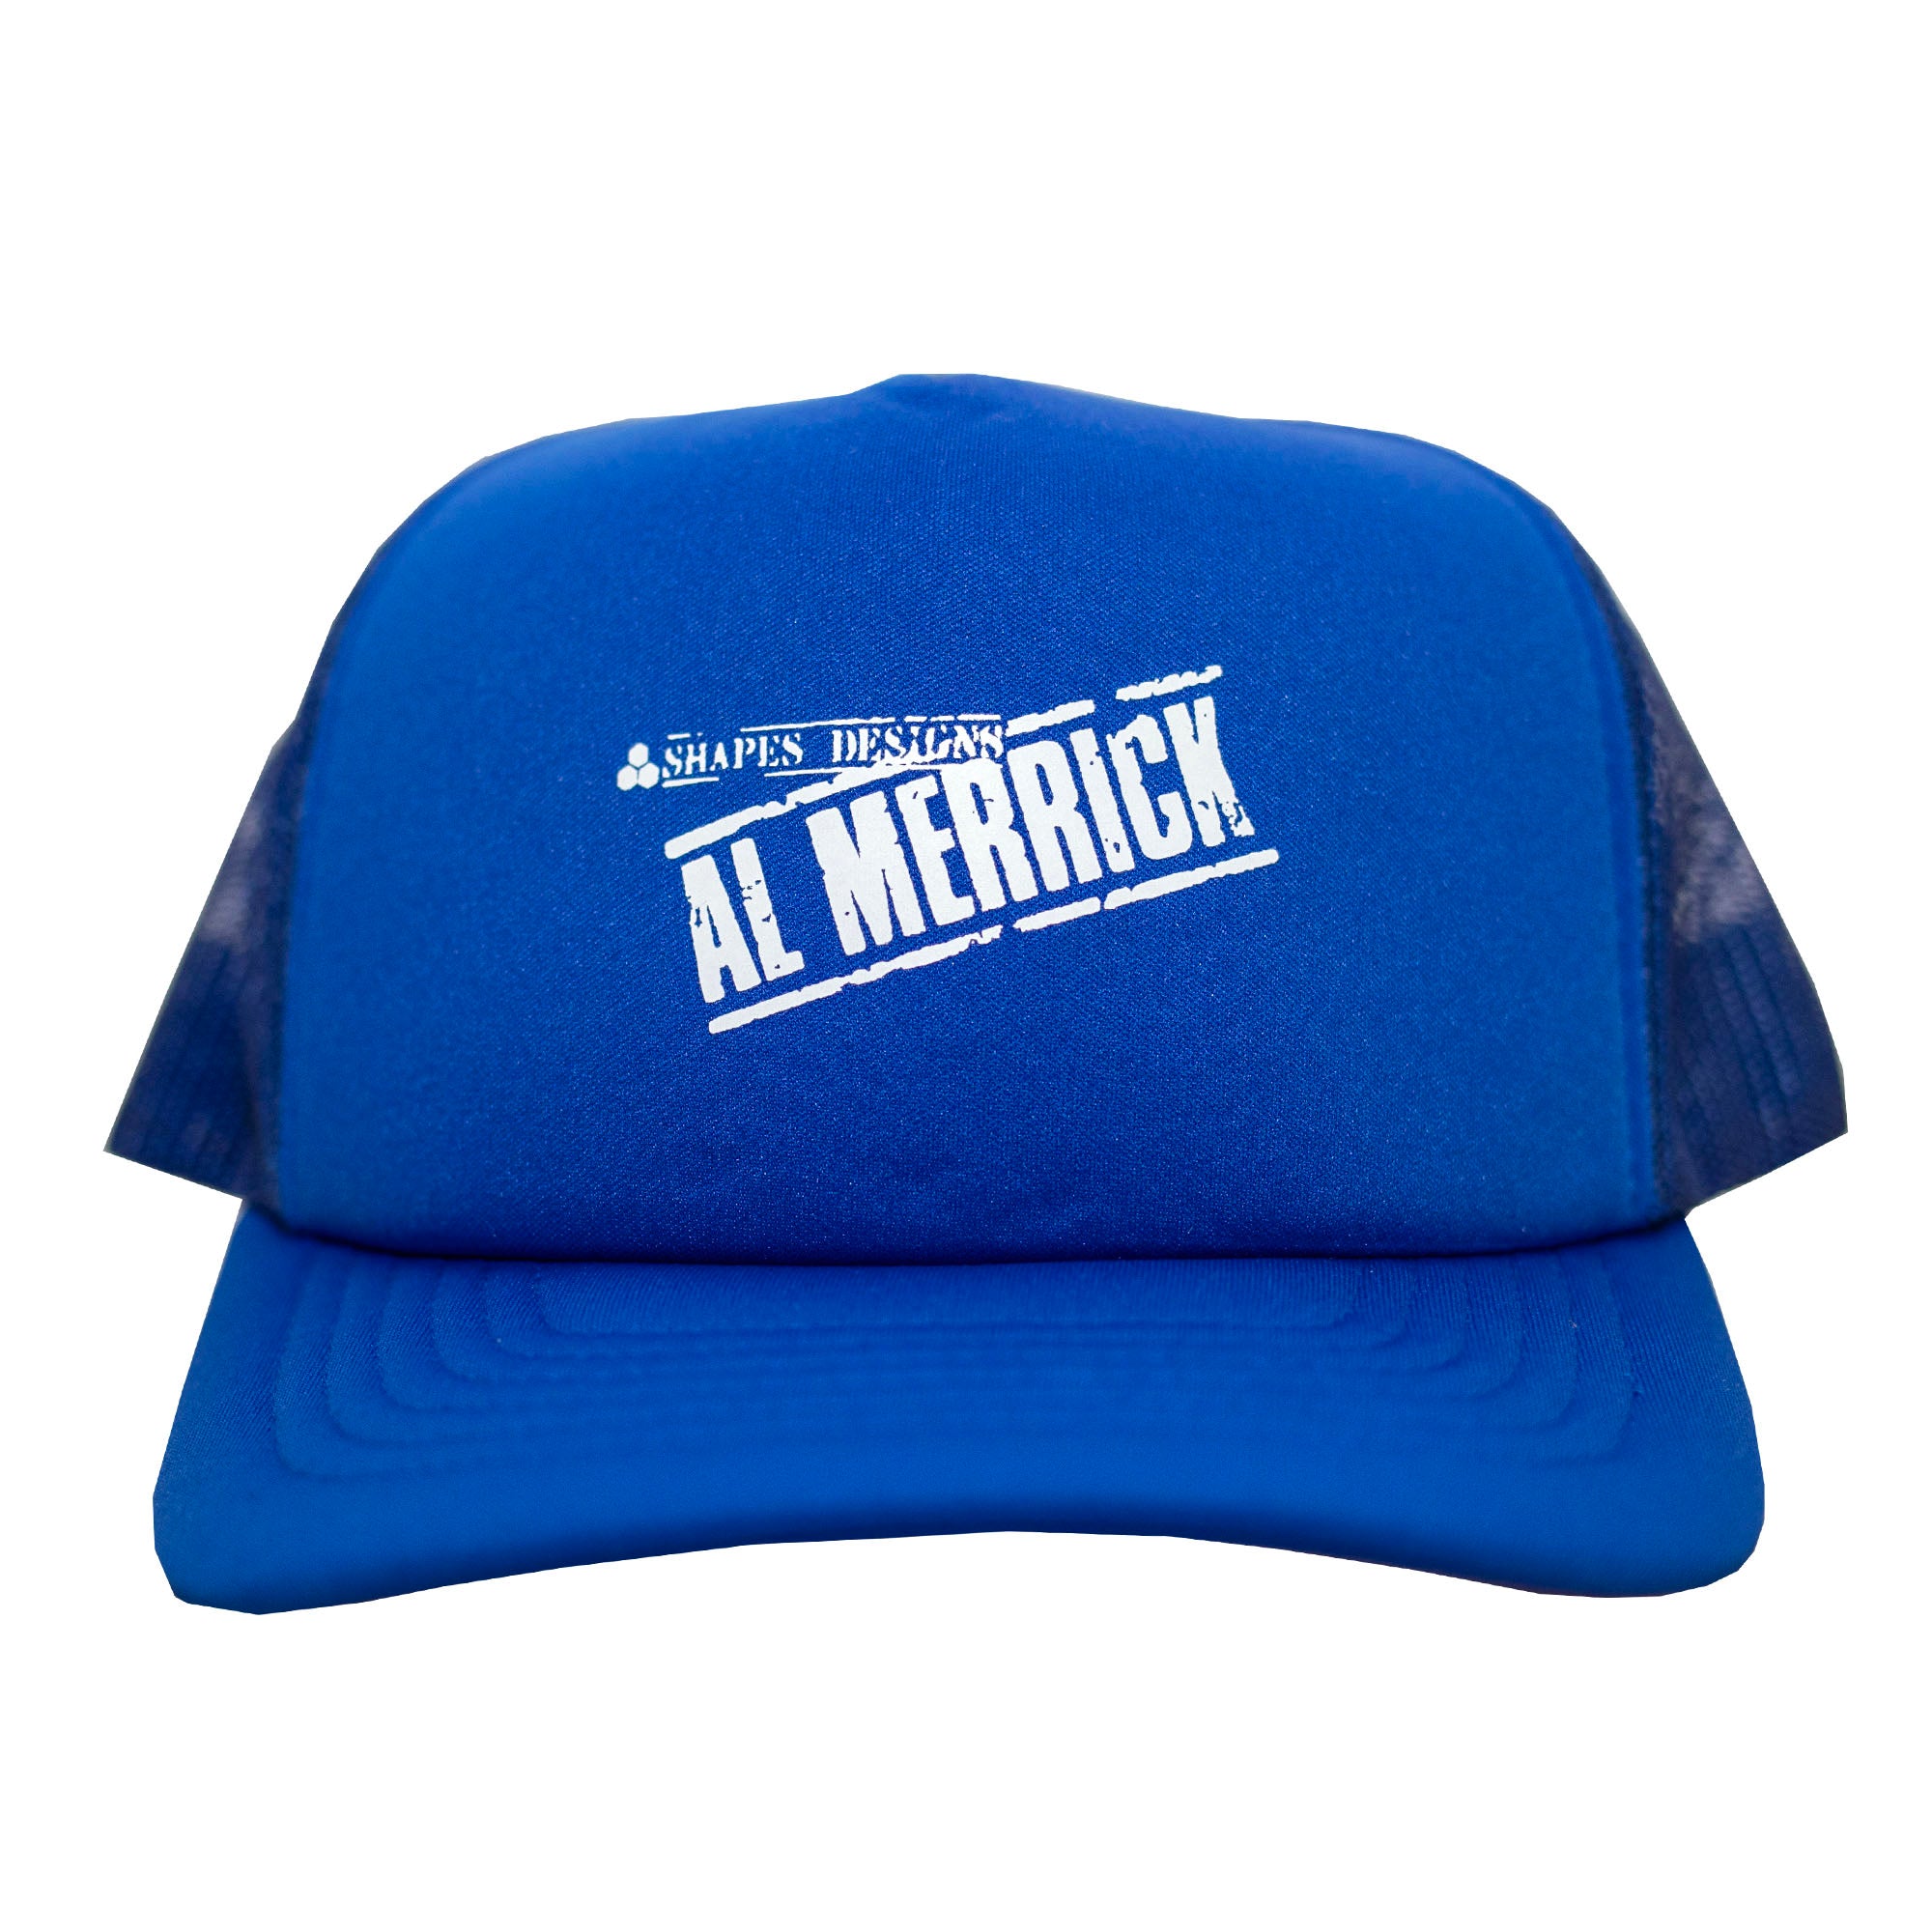 Channel Islands Merrick Trucker Hat